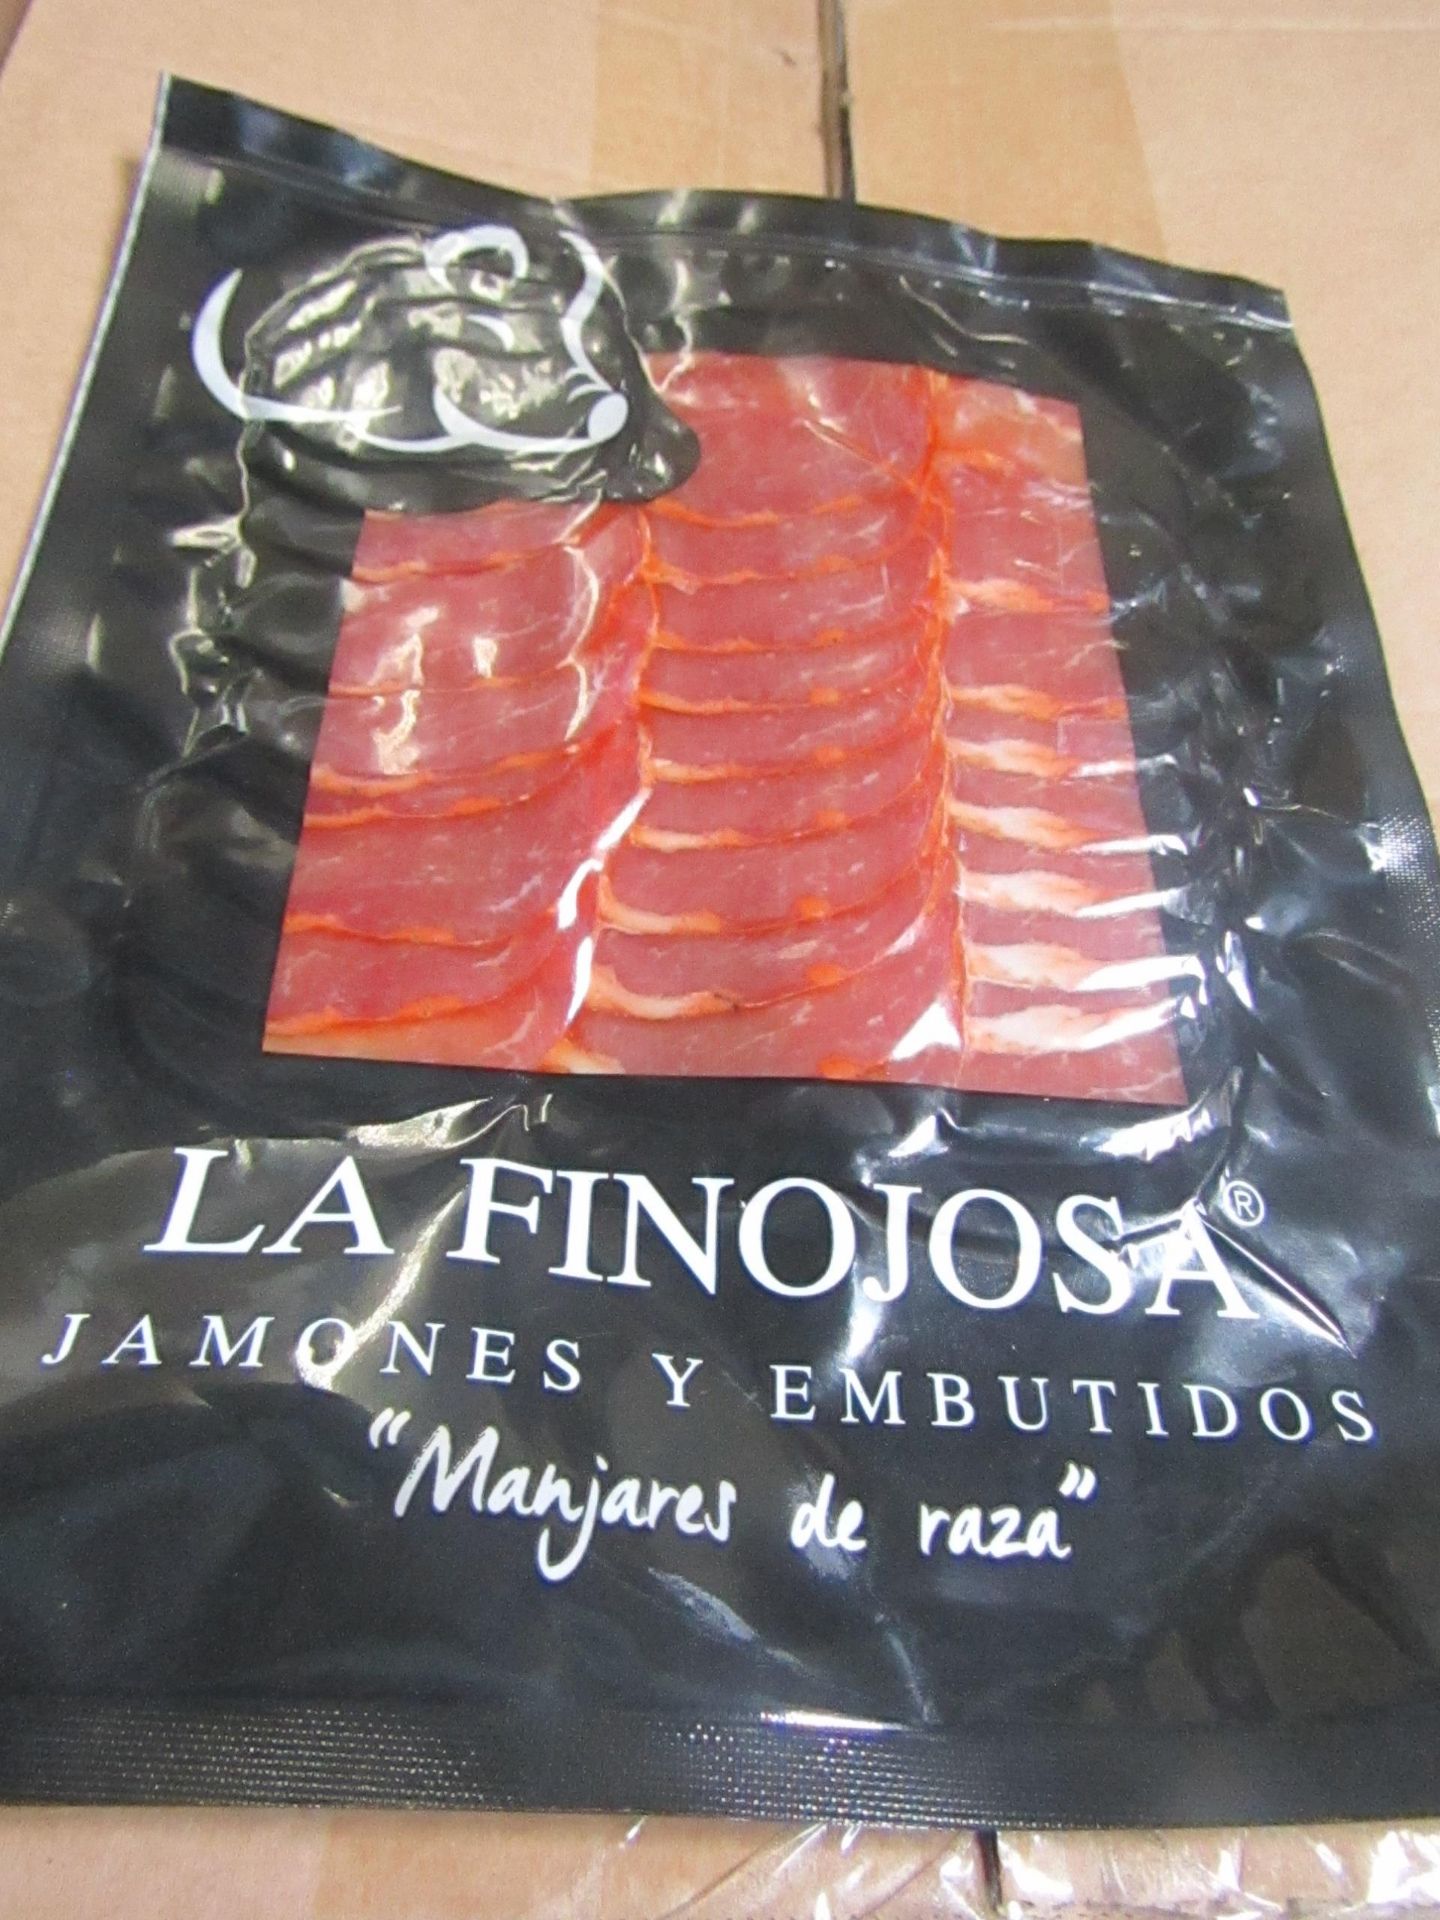 5 x La Finojosa 100g Packets Hand Carved Iberico Ham BB 7.3.22 RRP £24.50 per packet on Amazon